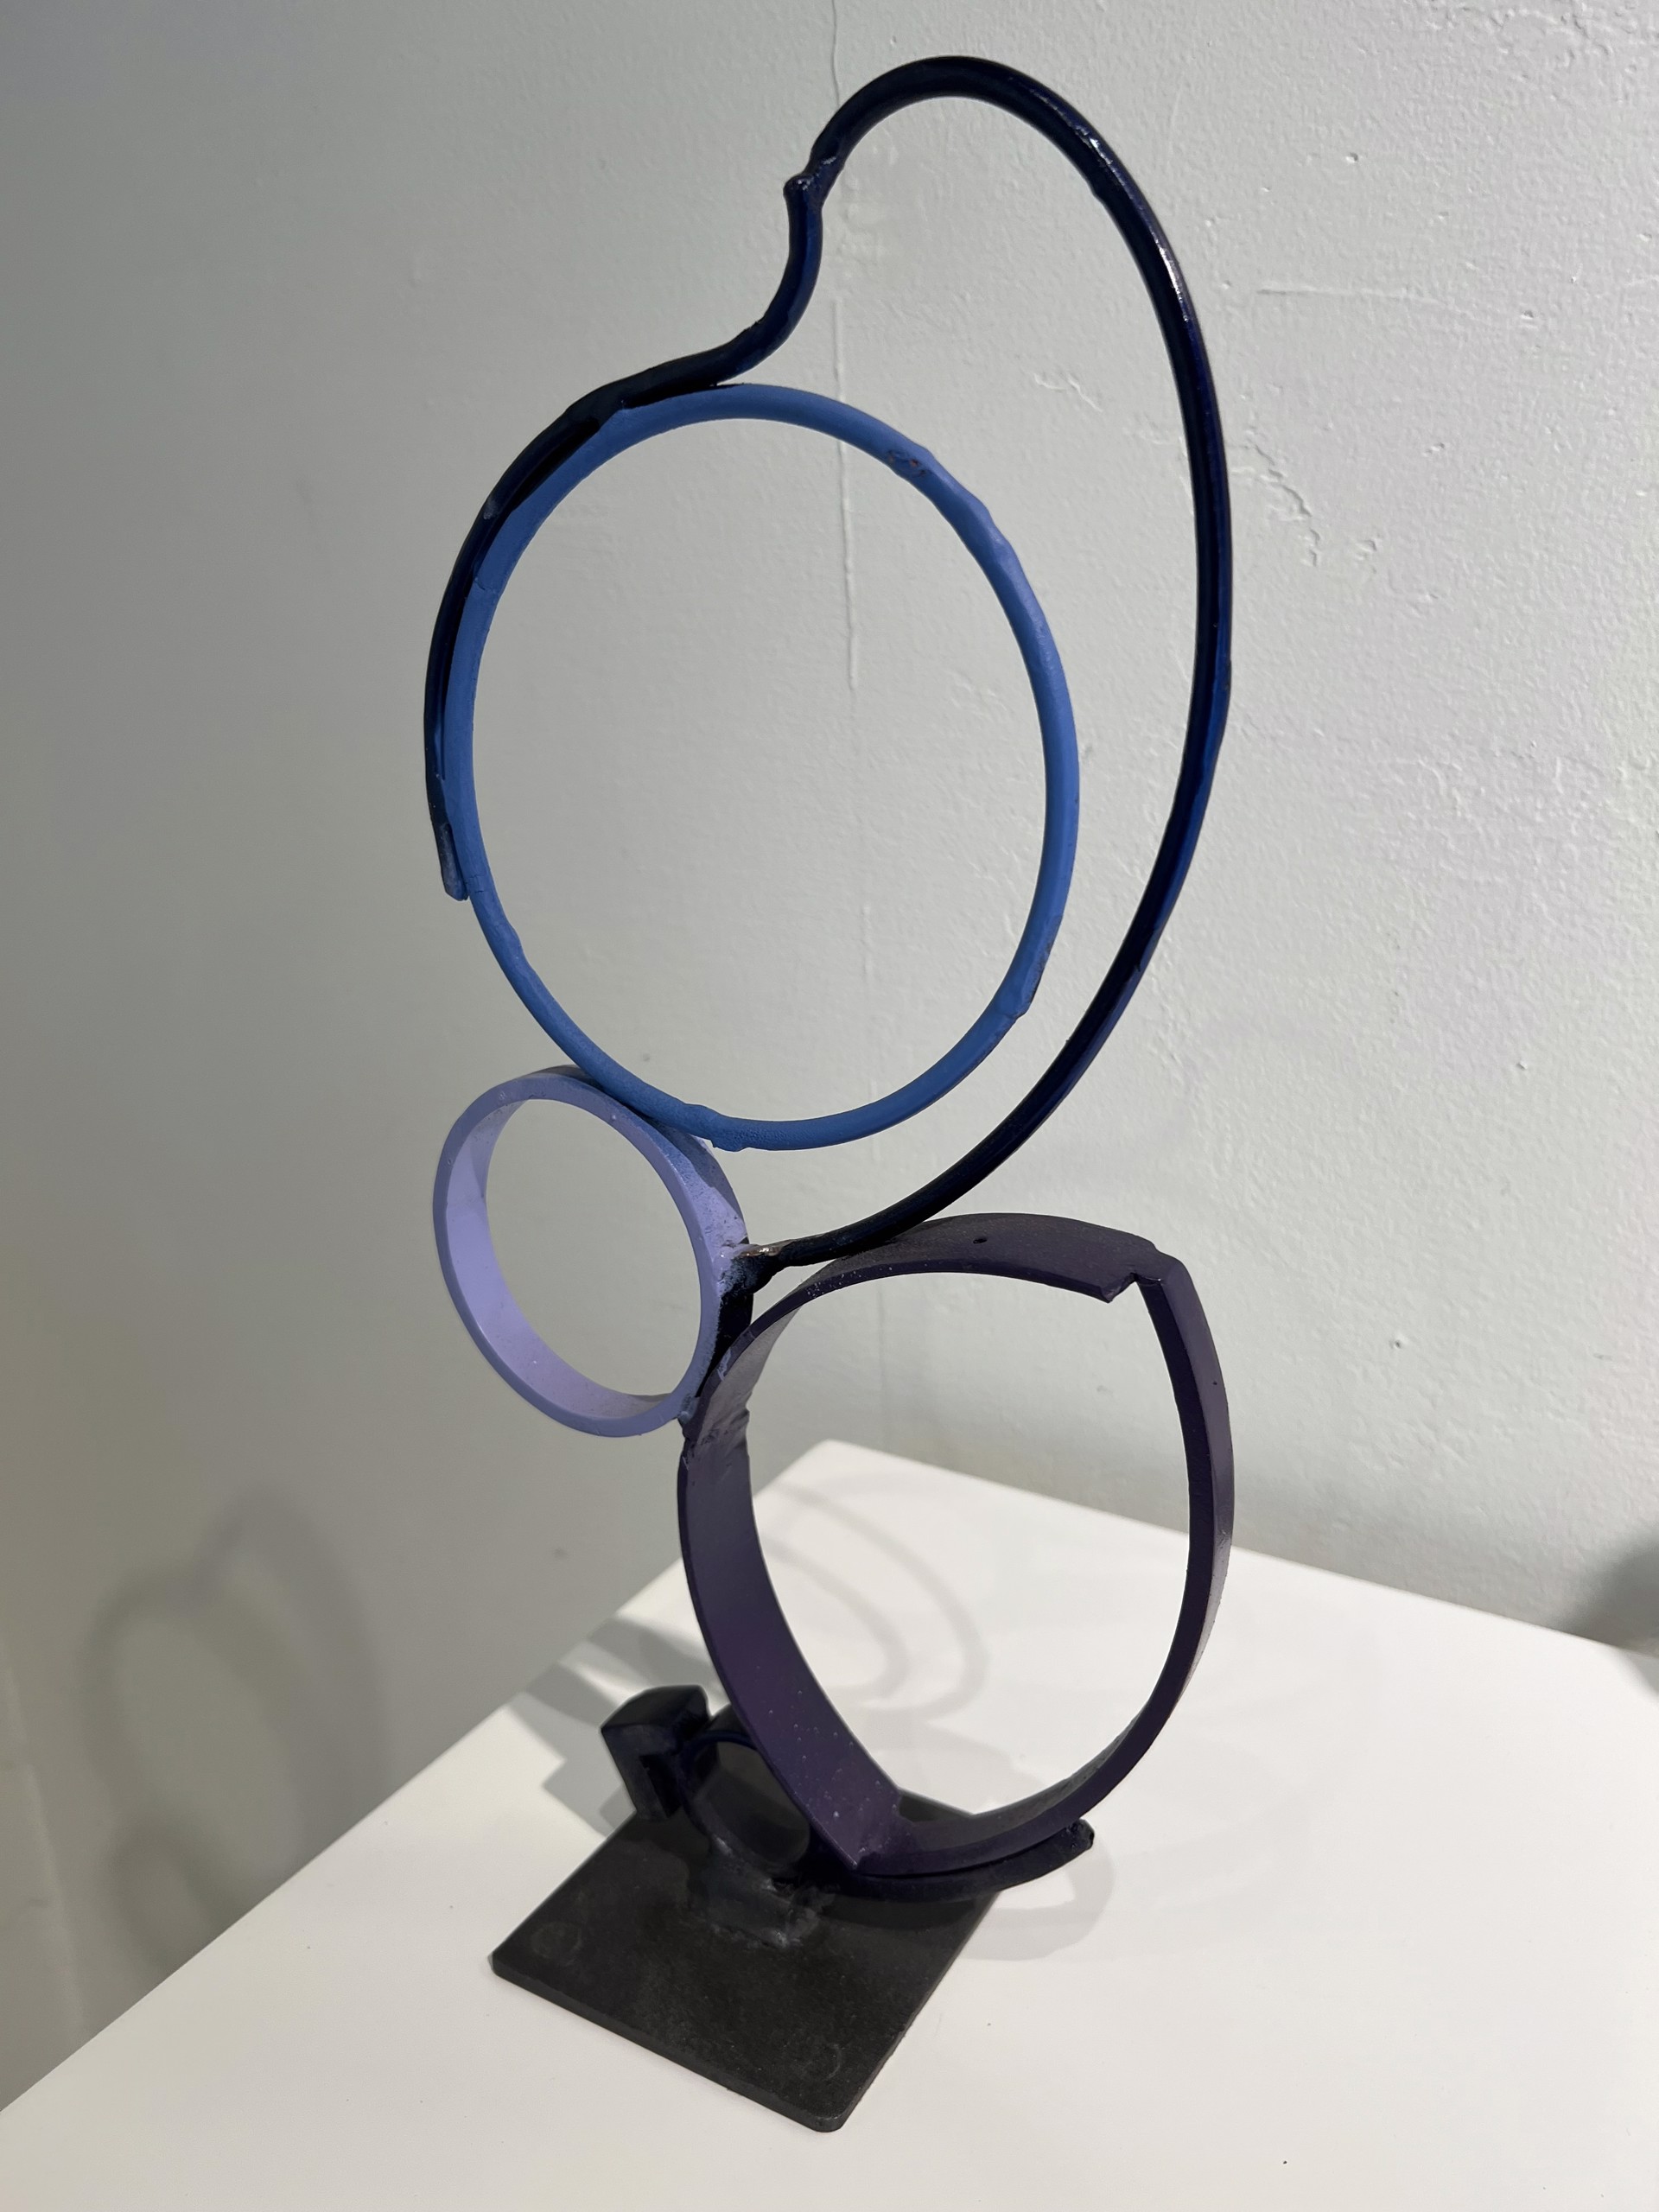 Balancing Circles by Steve Steinman